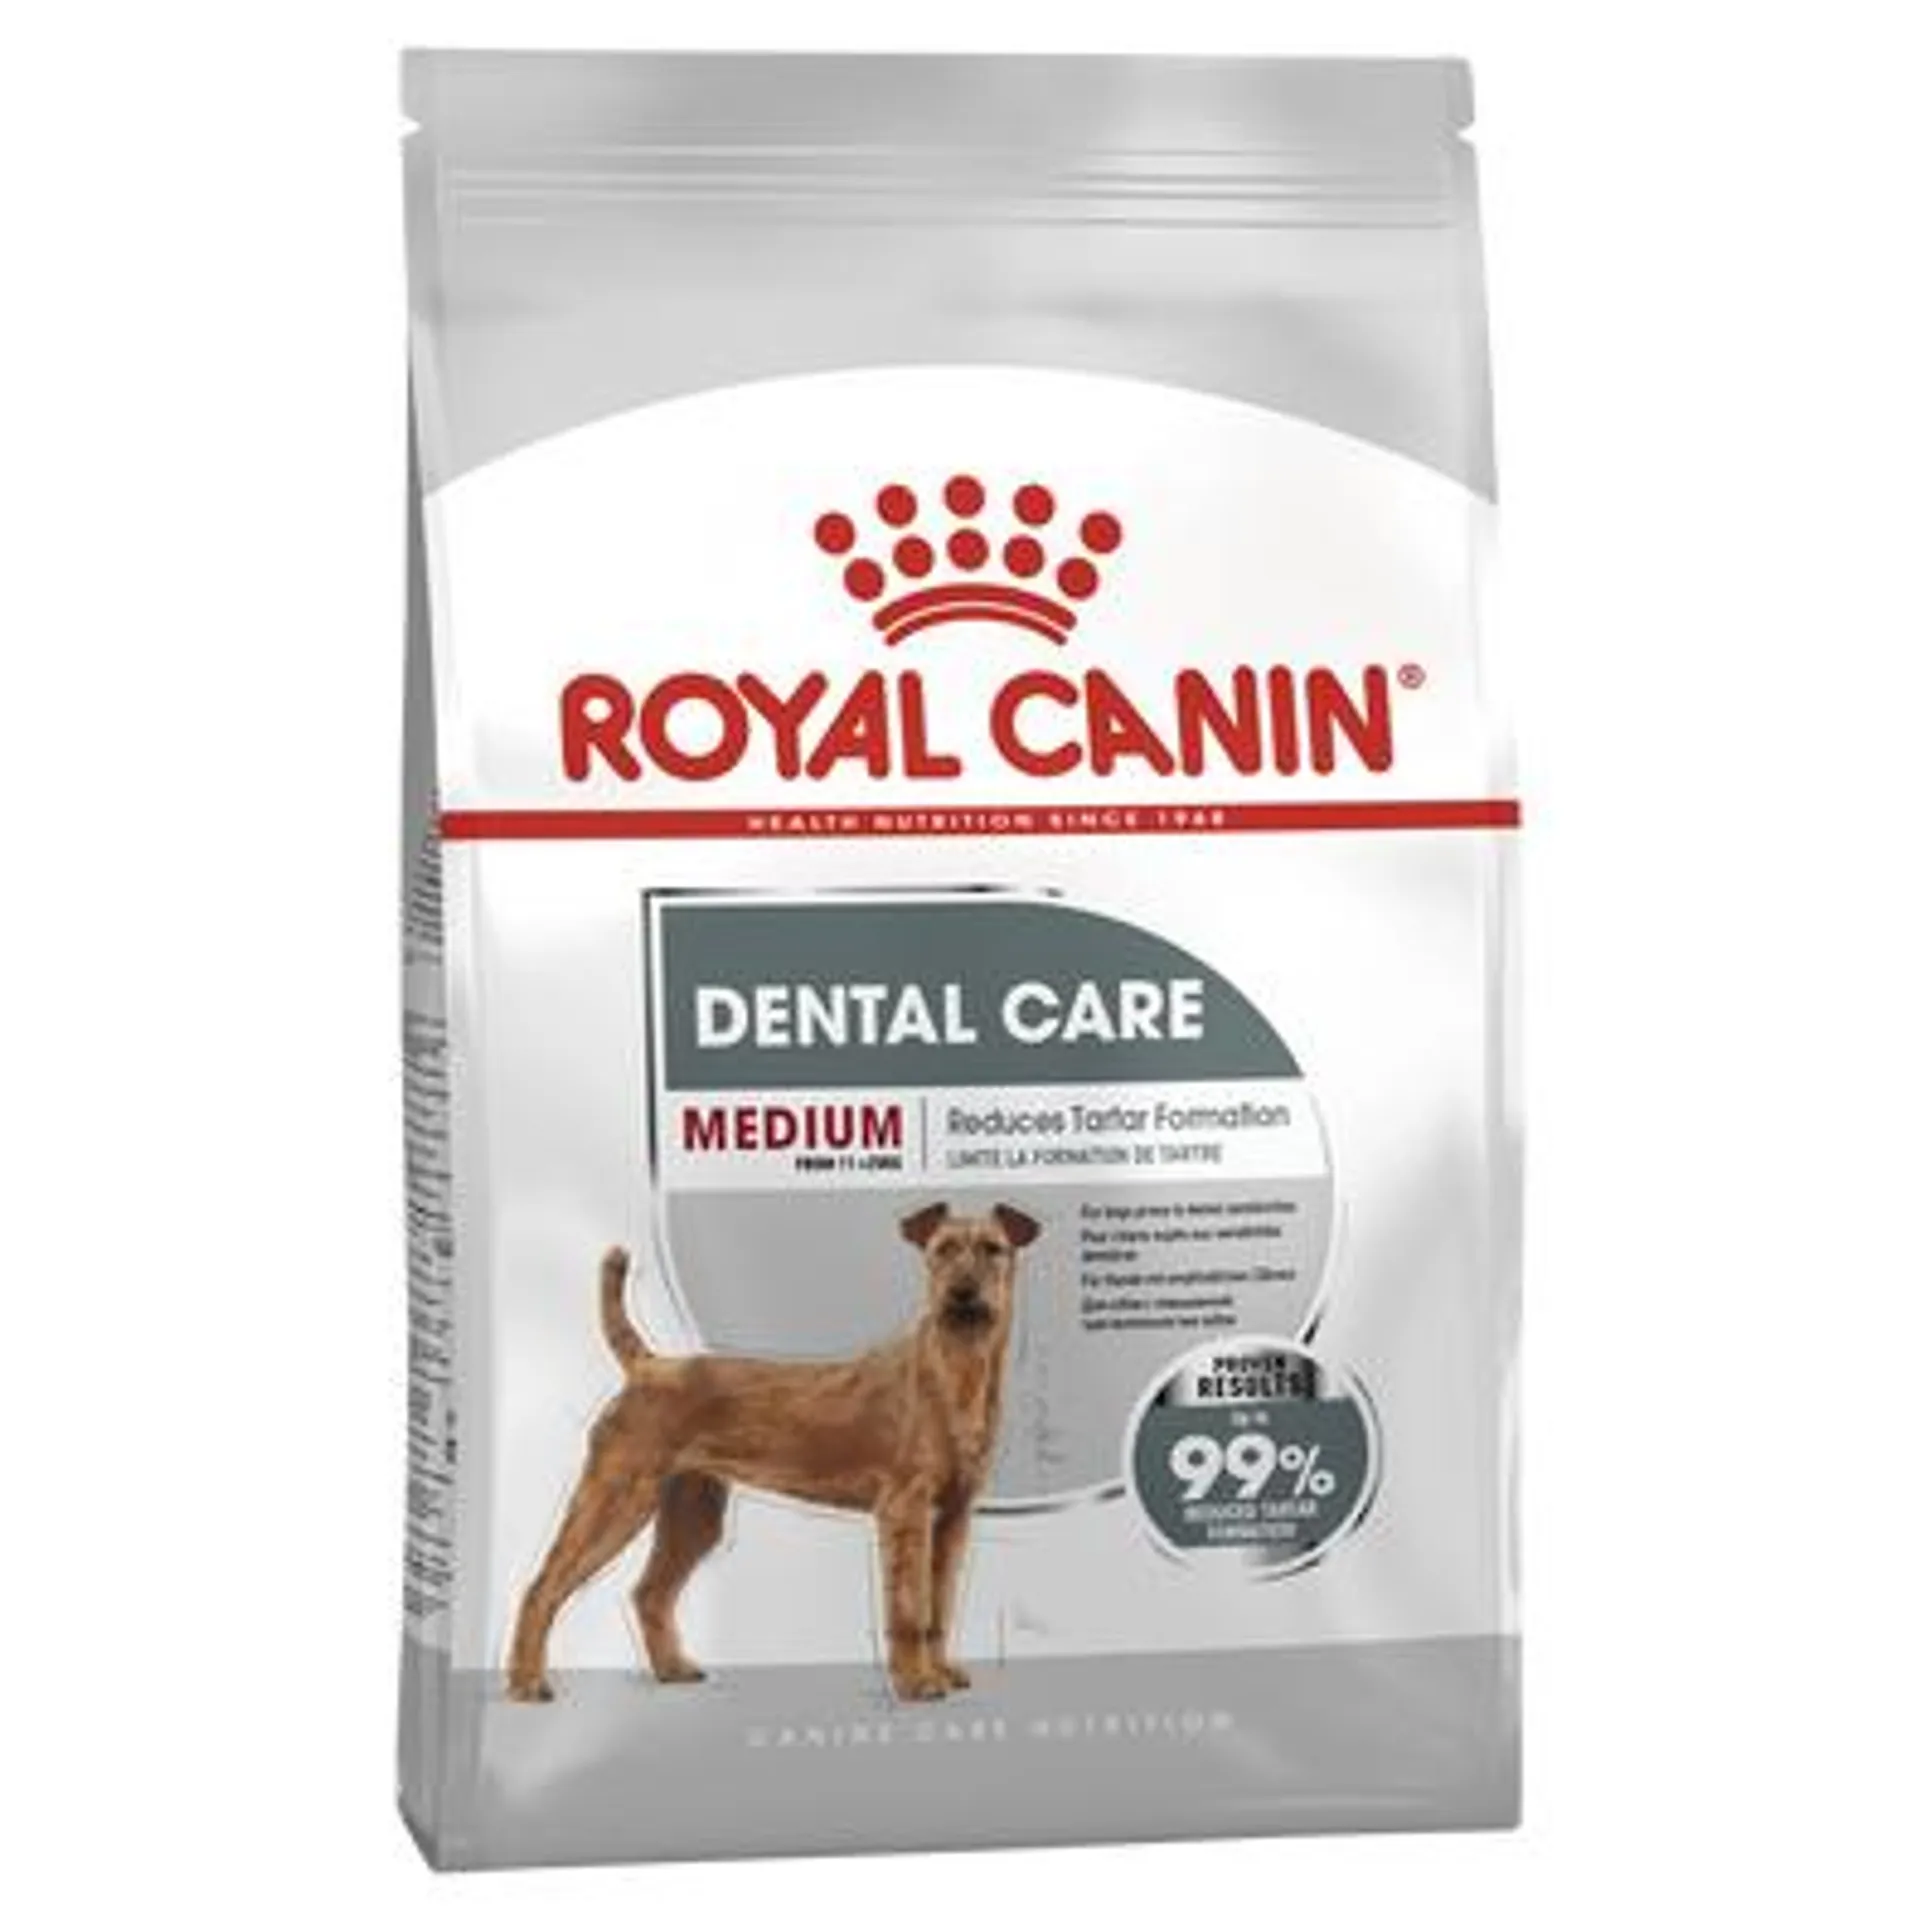 Royal Canin Medium Dental Care Dry Dog Food